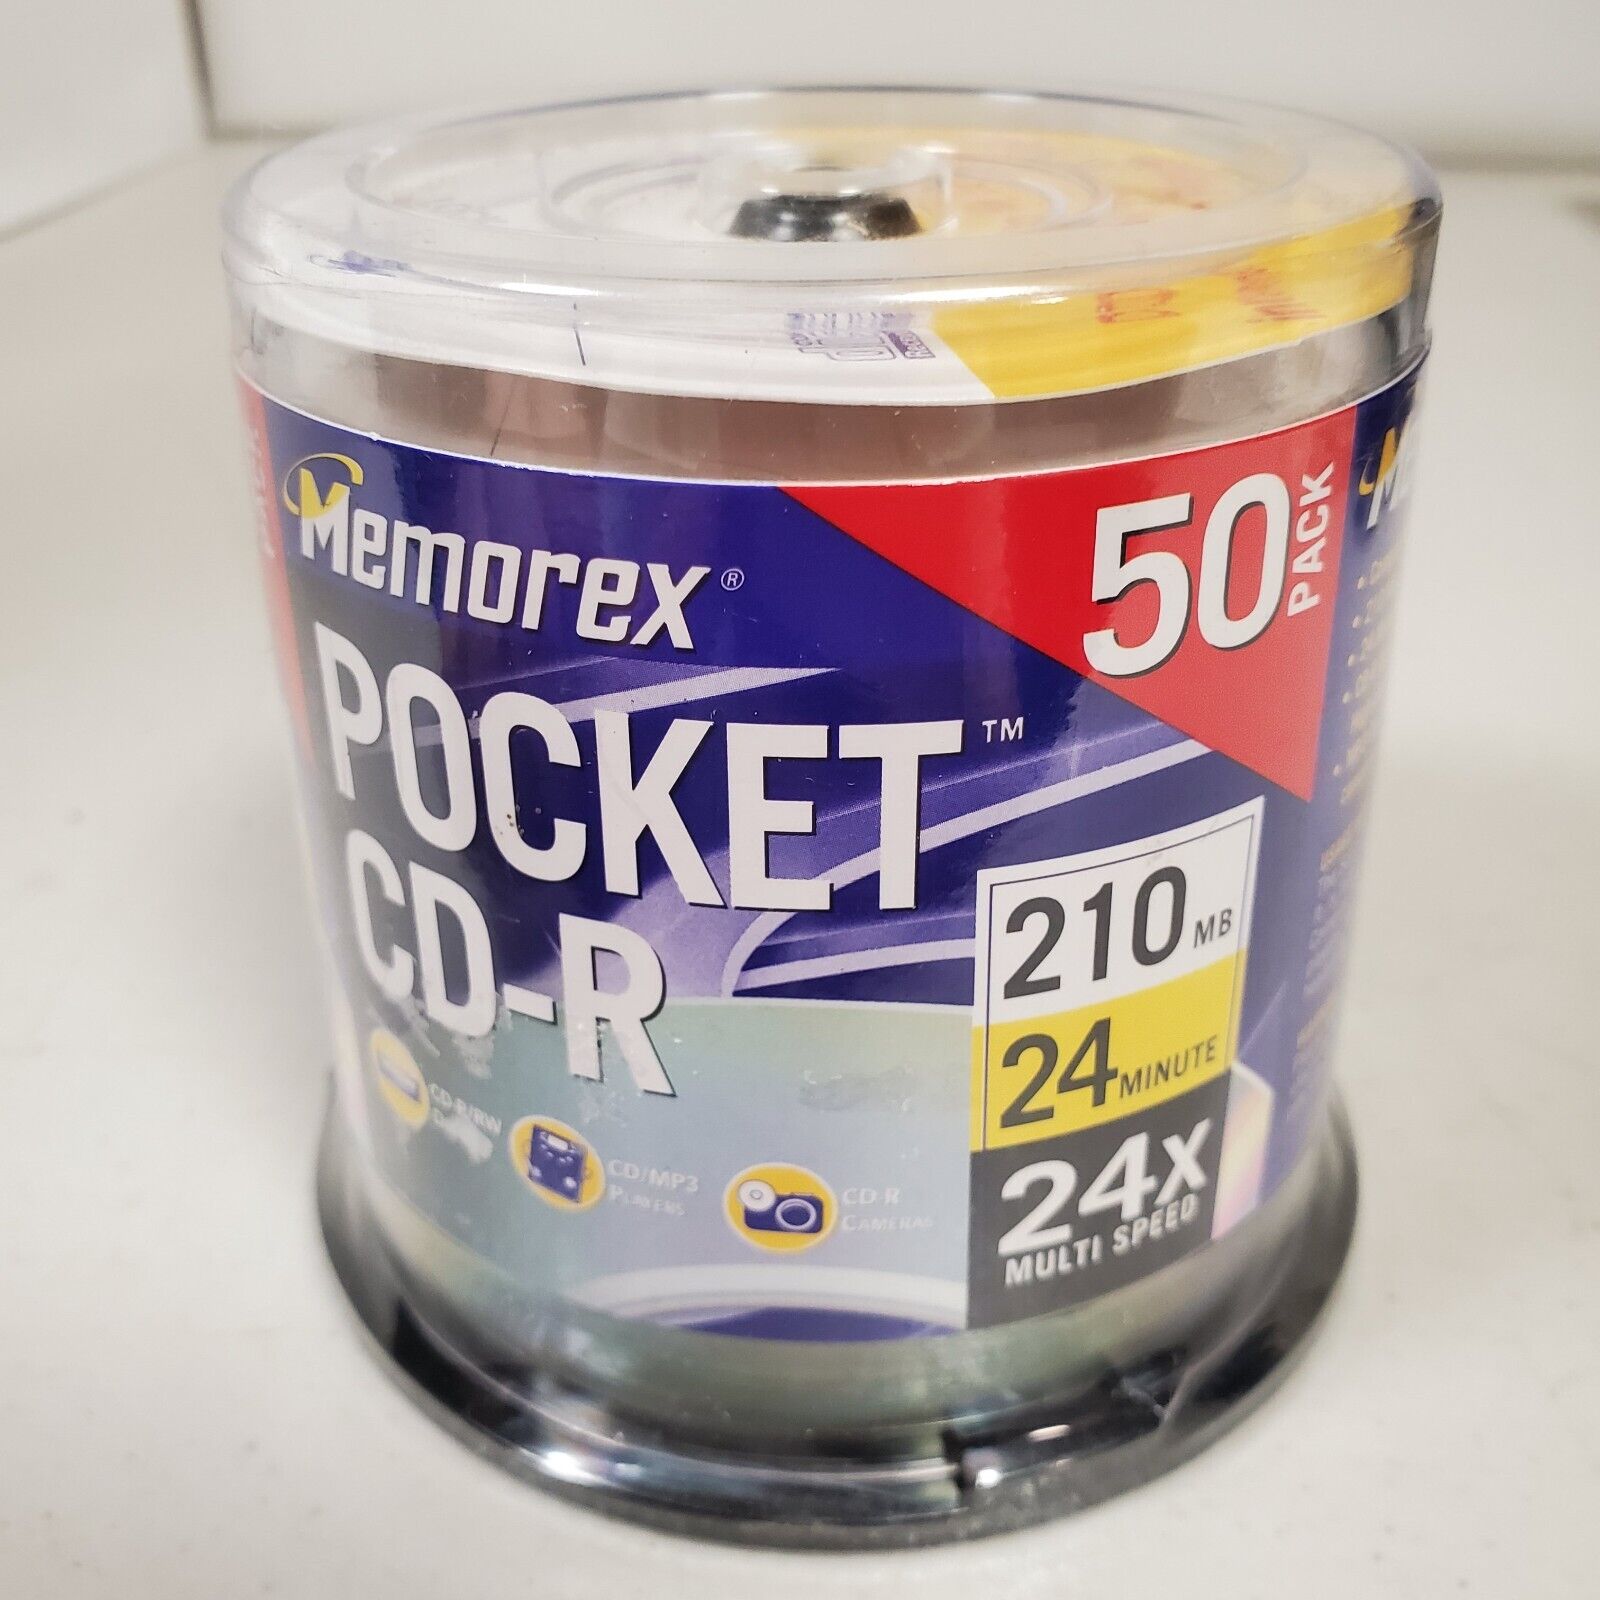 Memorex Pocket CD-R 50 Pack of Discs 24 min 24X Multi Speed Brand New Sealed